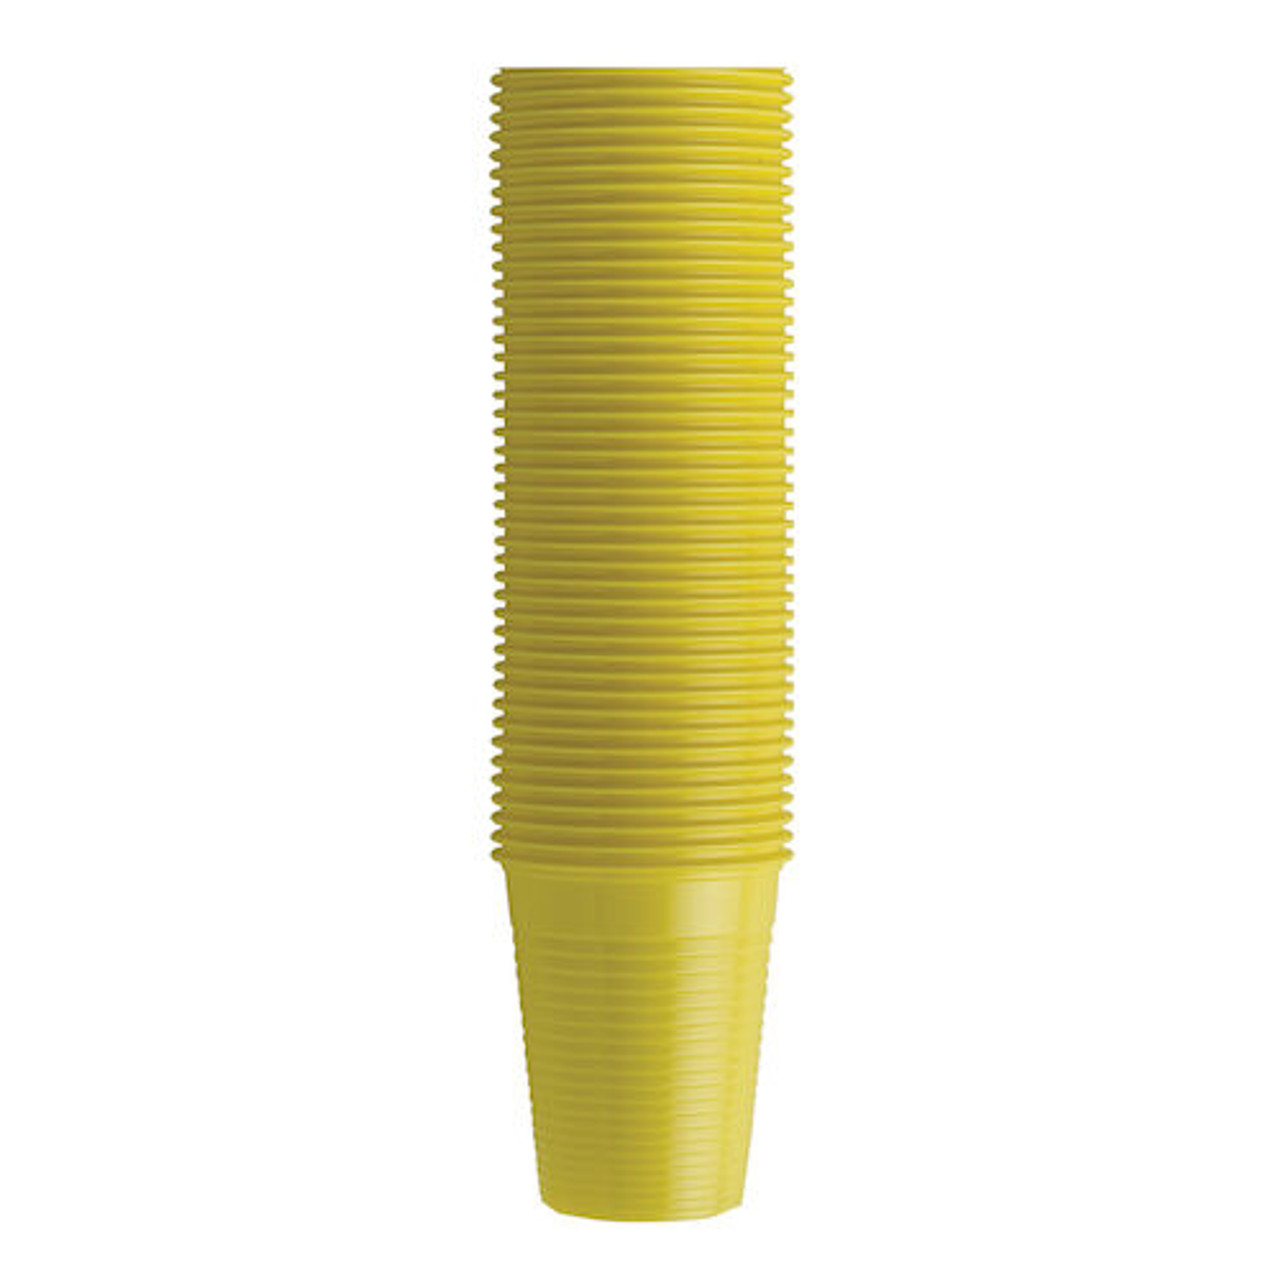 Monoart Plastic Cups Yellow, 200 ml, 100/Pkg. - Dental Wholesale